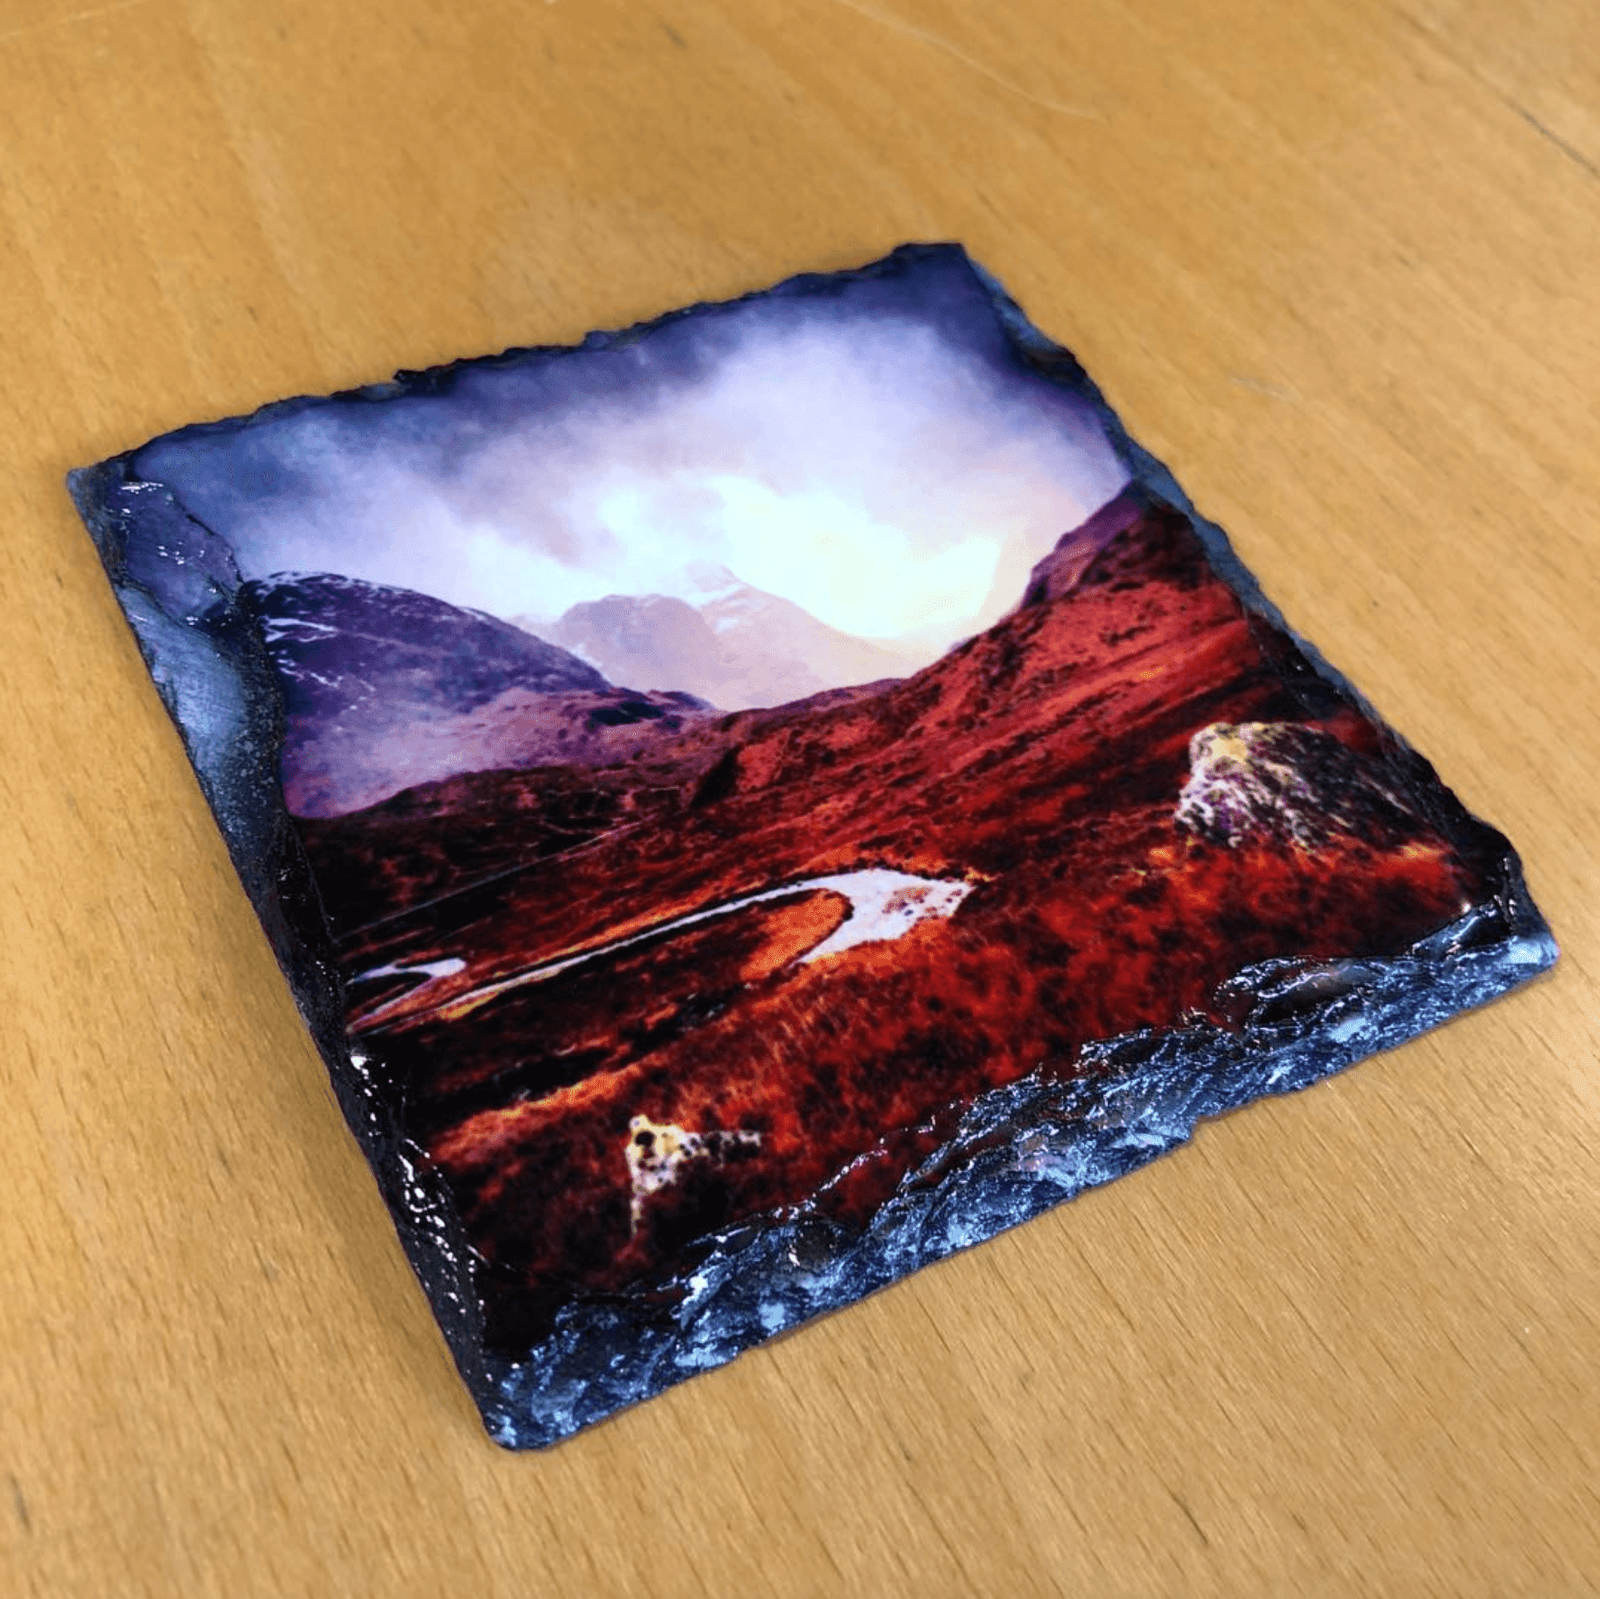 Ailsa Craig Dusk Arran Scottish Slate Art-Slate Art-Arran Art Gallery-Paintings, Prints, Homeware, Art Gifts From Scotland By Scottish Artist Kevin Hunter